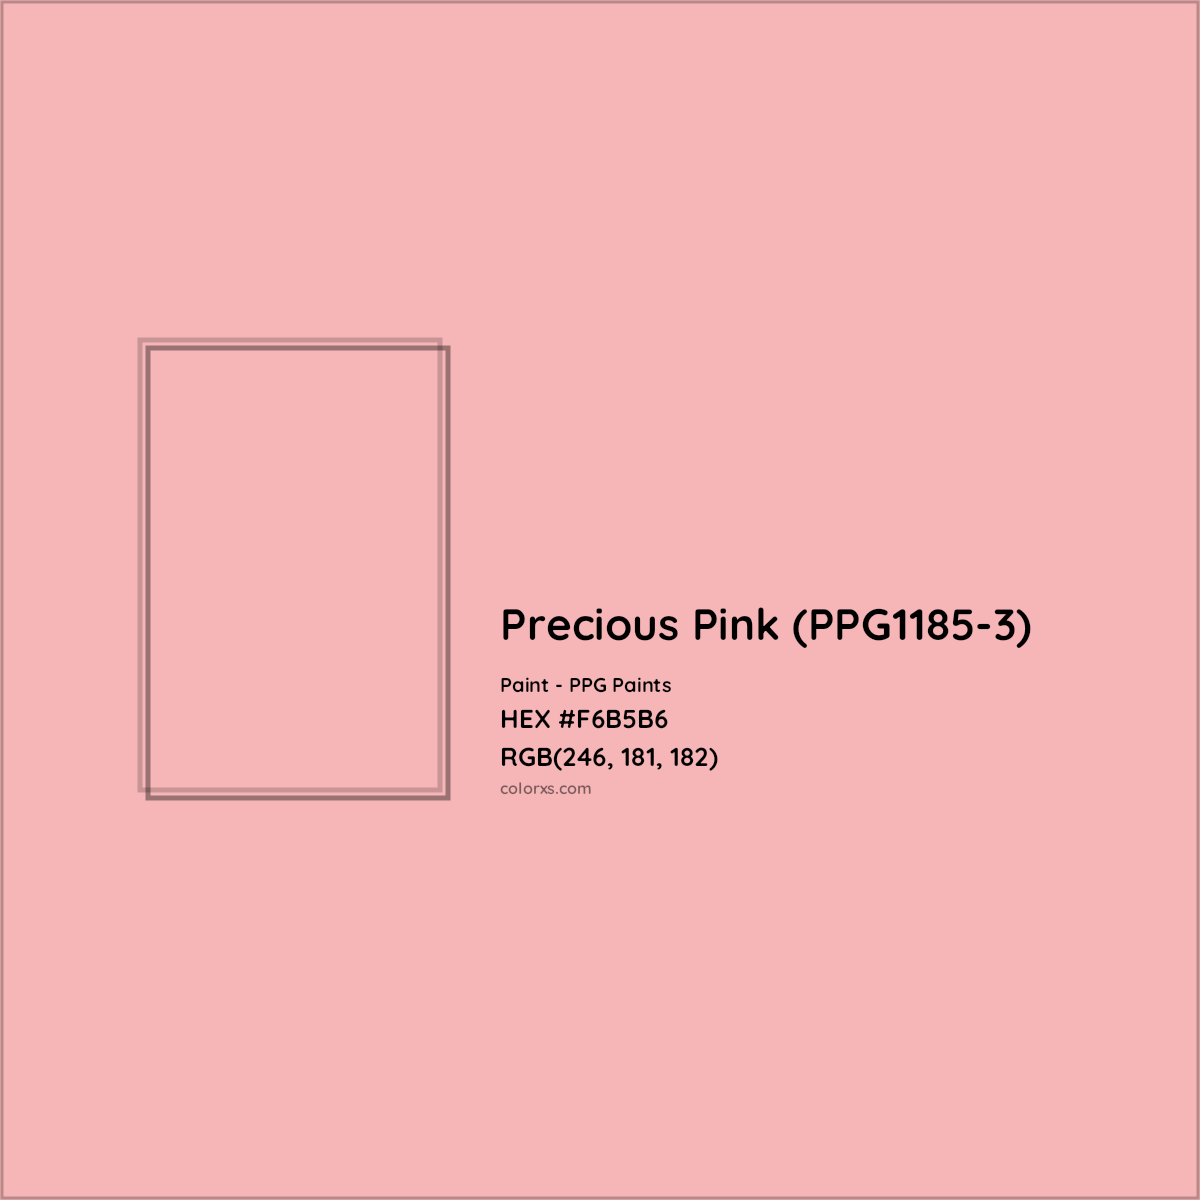 HEX #F6B5B6 Precious Pink (PPG1185-3) Paint PPG Paints - Color Code